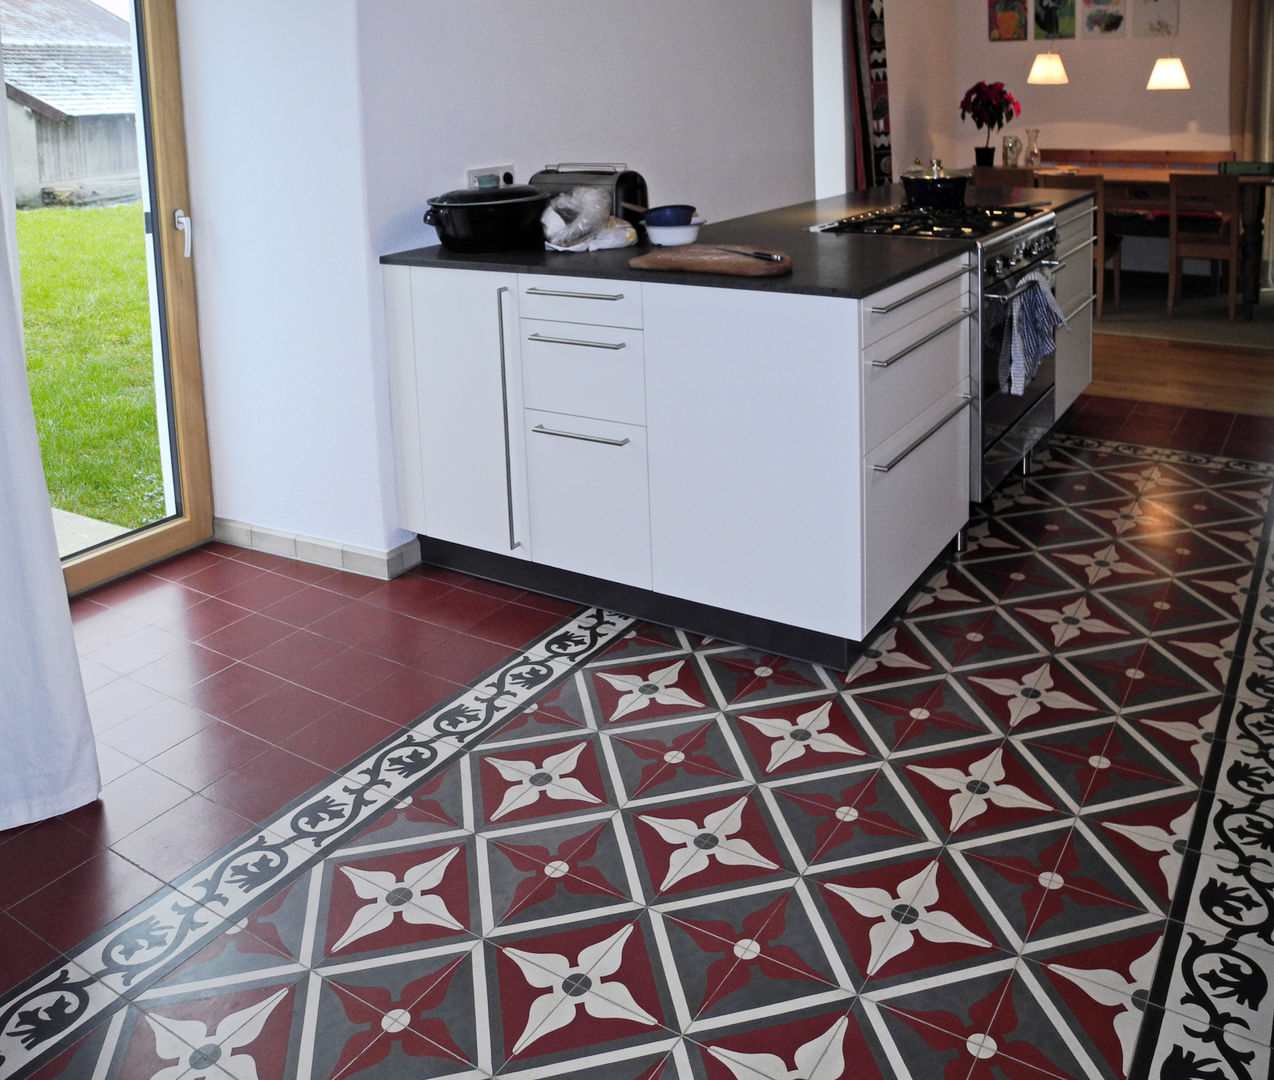 Encaustic Cement Tiles with Endless Pattern Combination, Original Features Original Features جدران Tiles